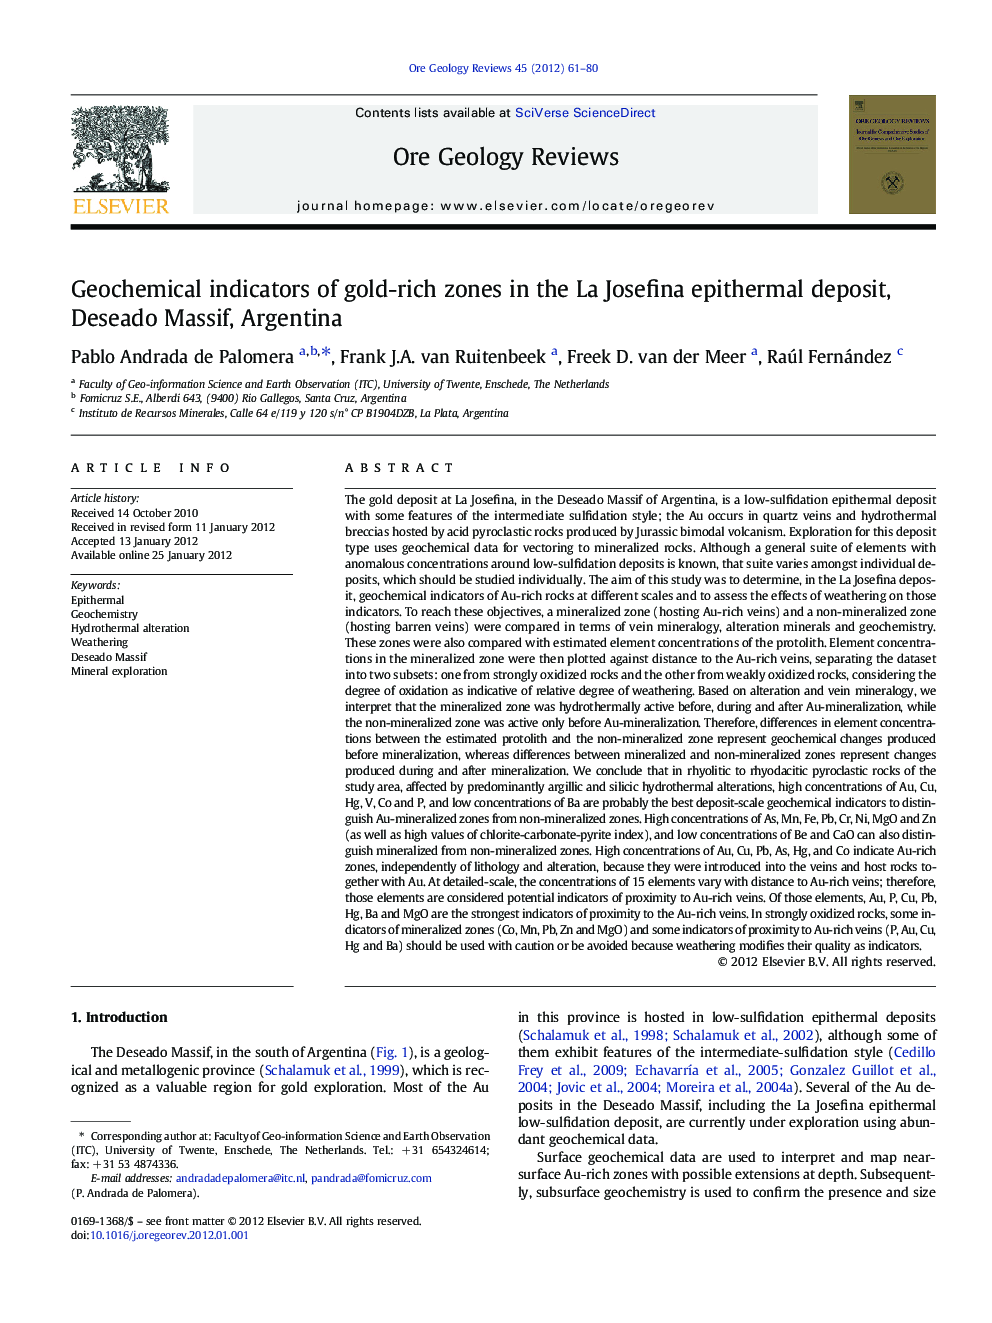 Geochemical indicators of gold-rich zones in the La Josefina epithermal deposit, Deseado Massif, Argentina